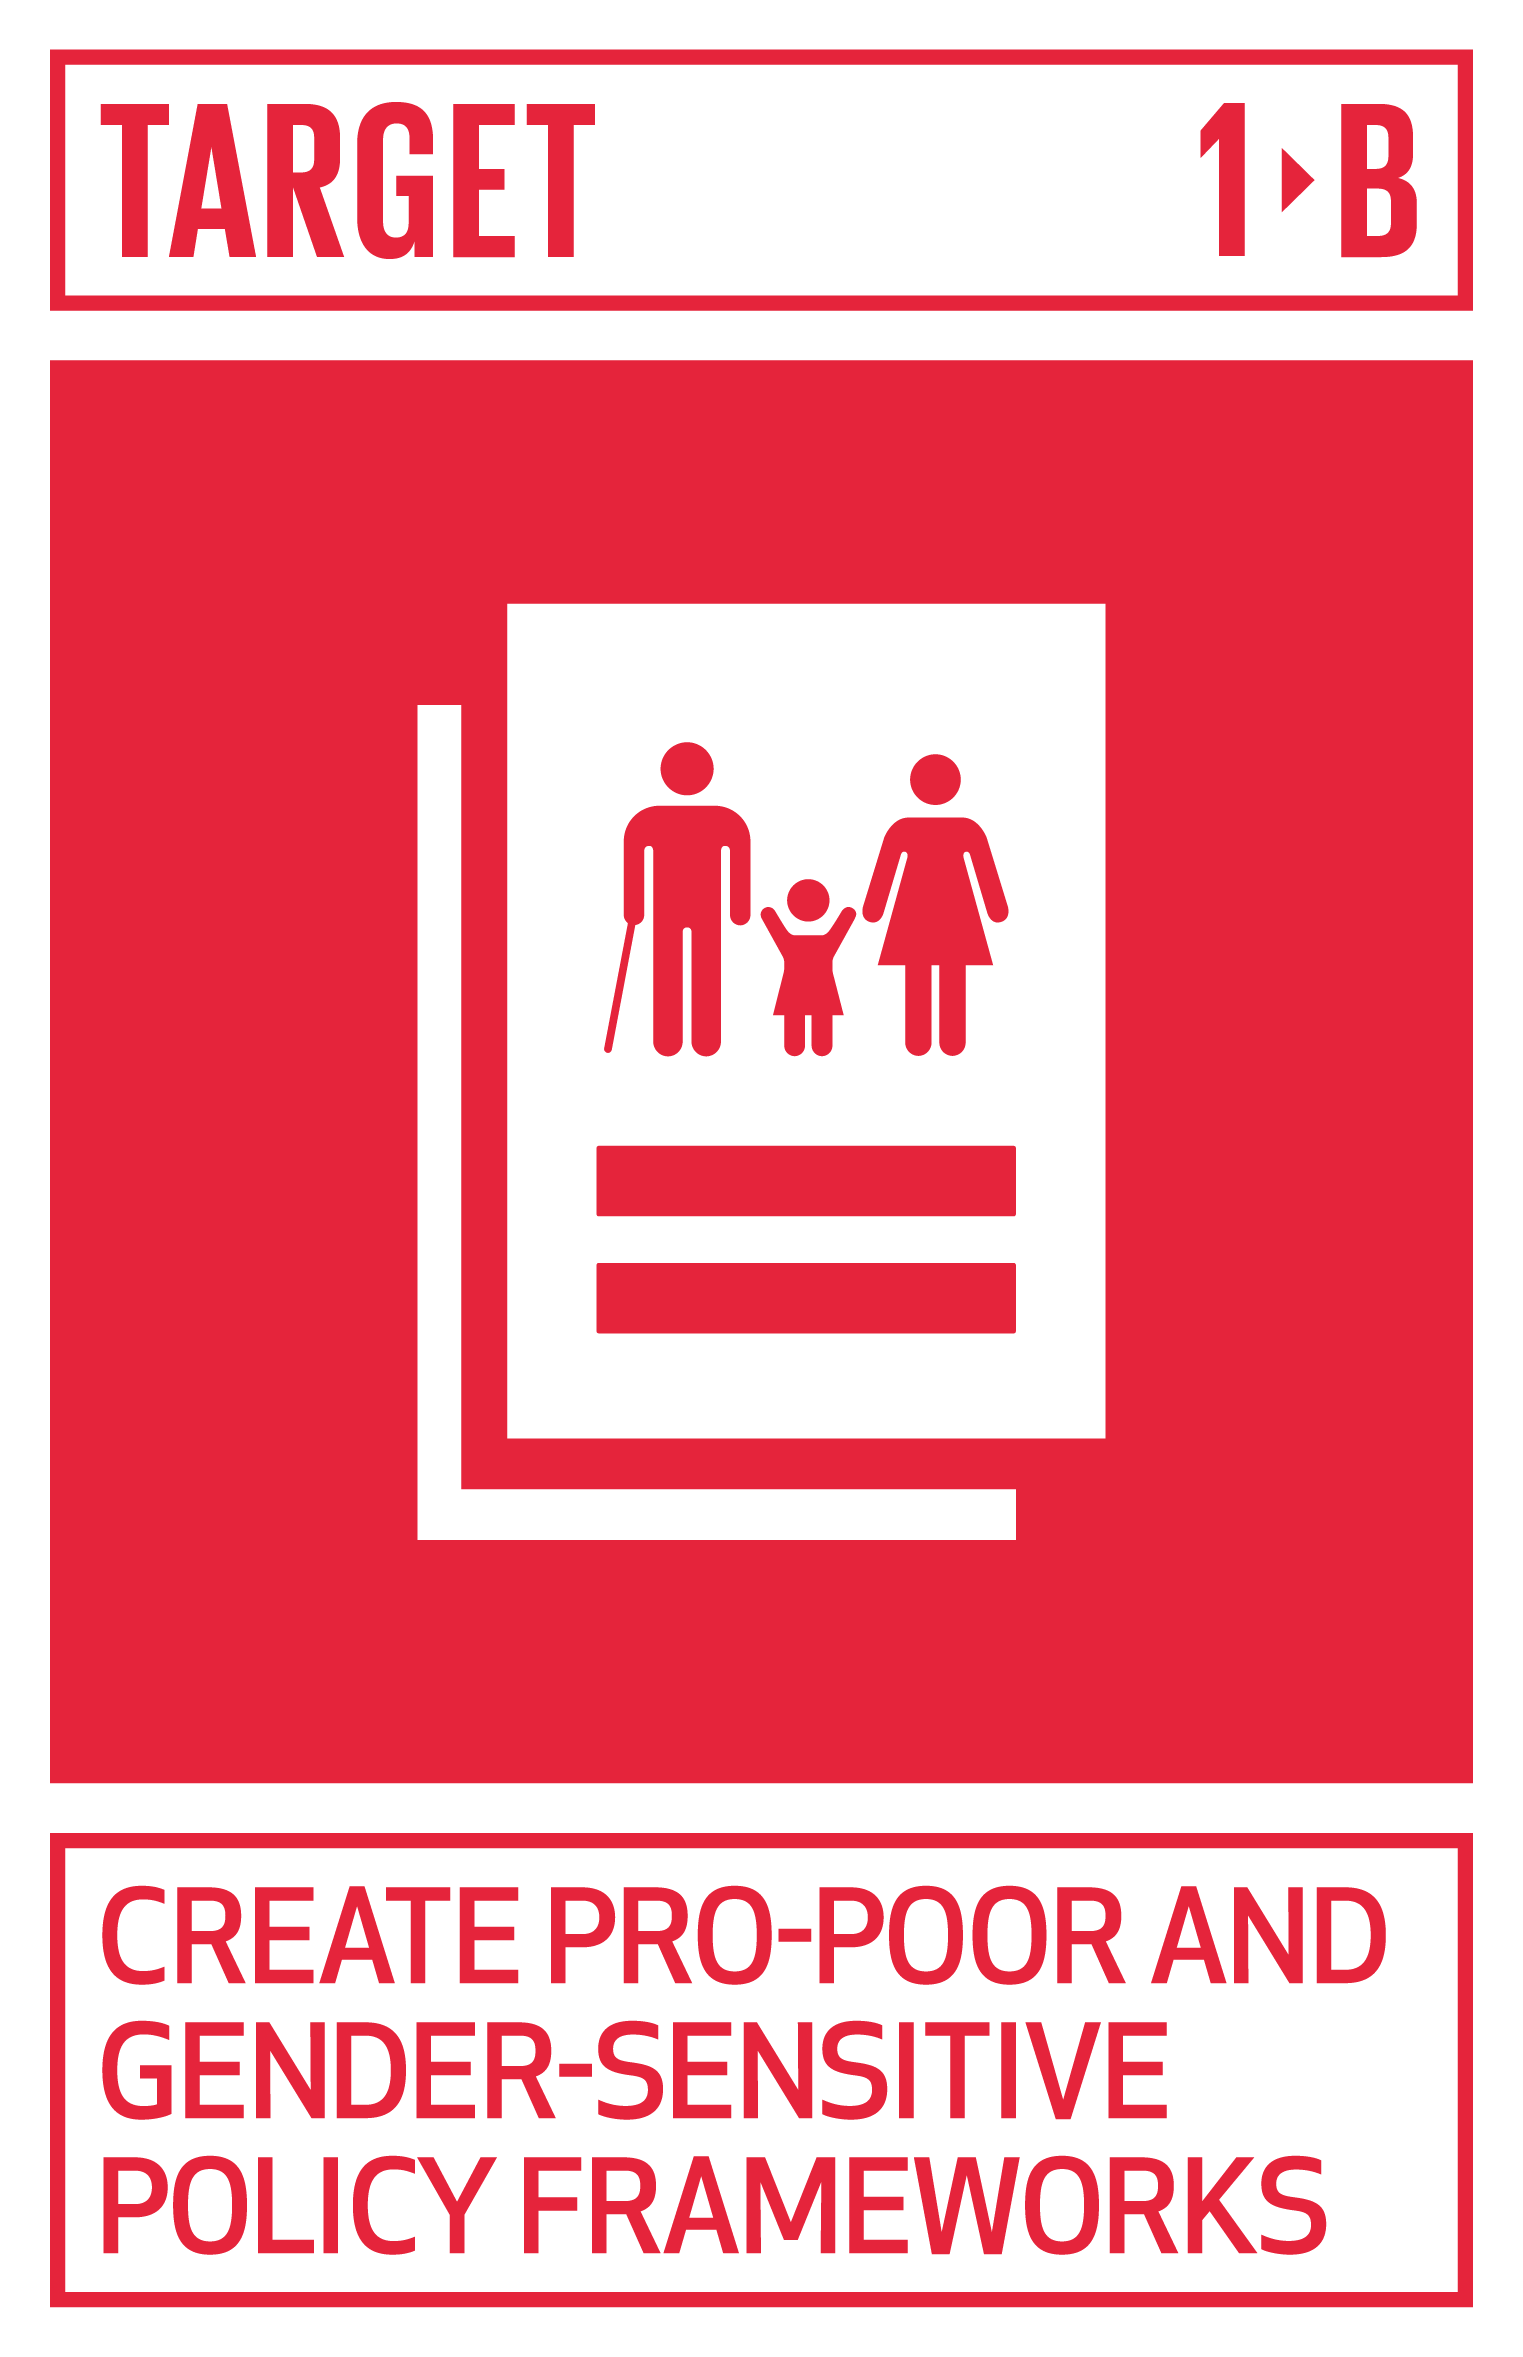 Goal,target,sdgs1消除貧窮－消除各地一切形式的貧窮,目標1.B建立有利於窮人和對性別問題敏感的政策框架